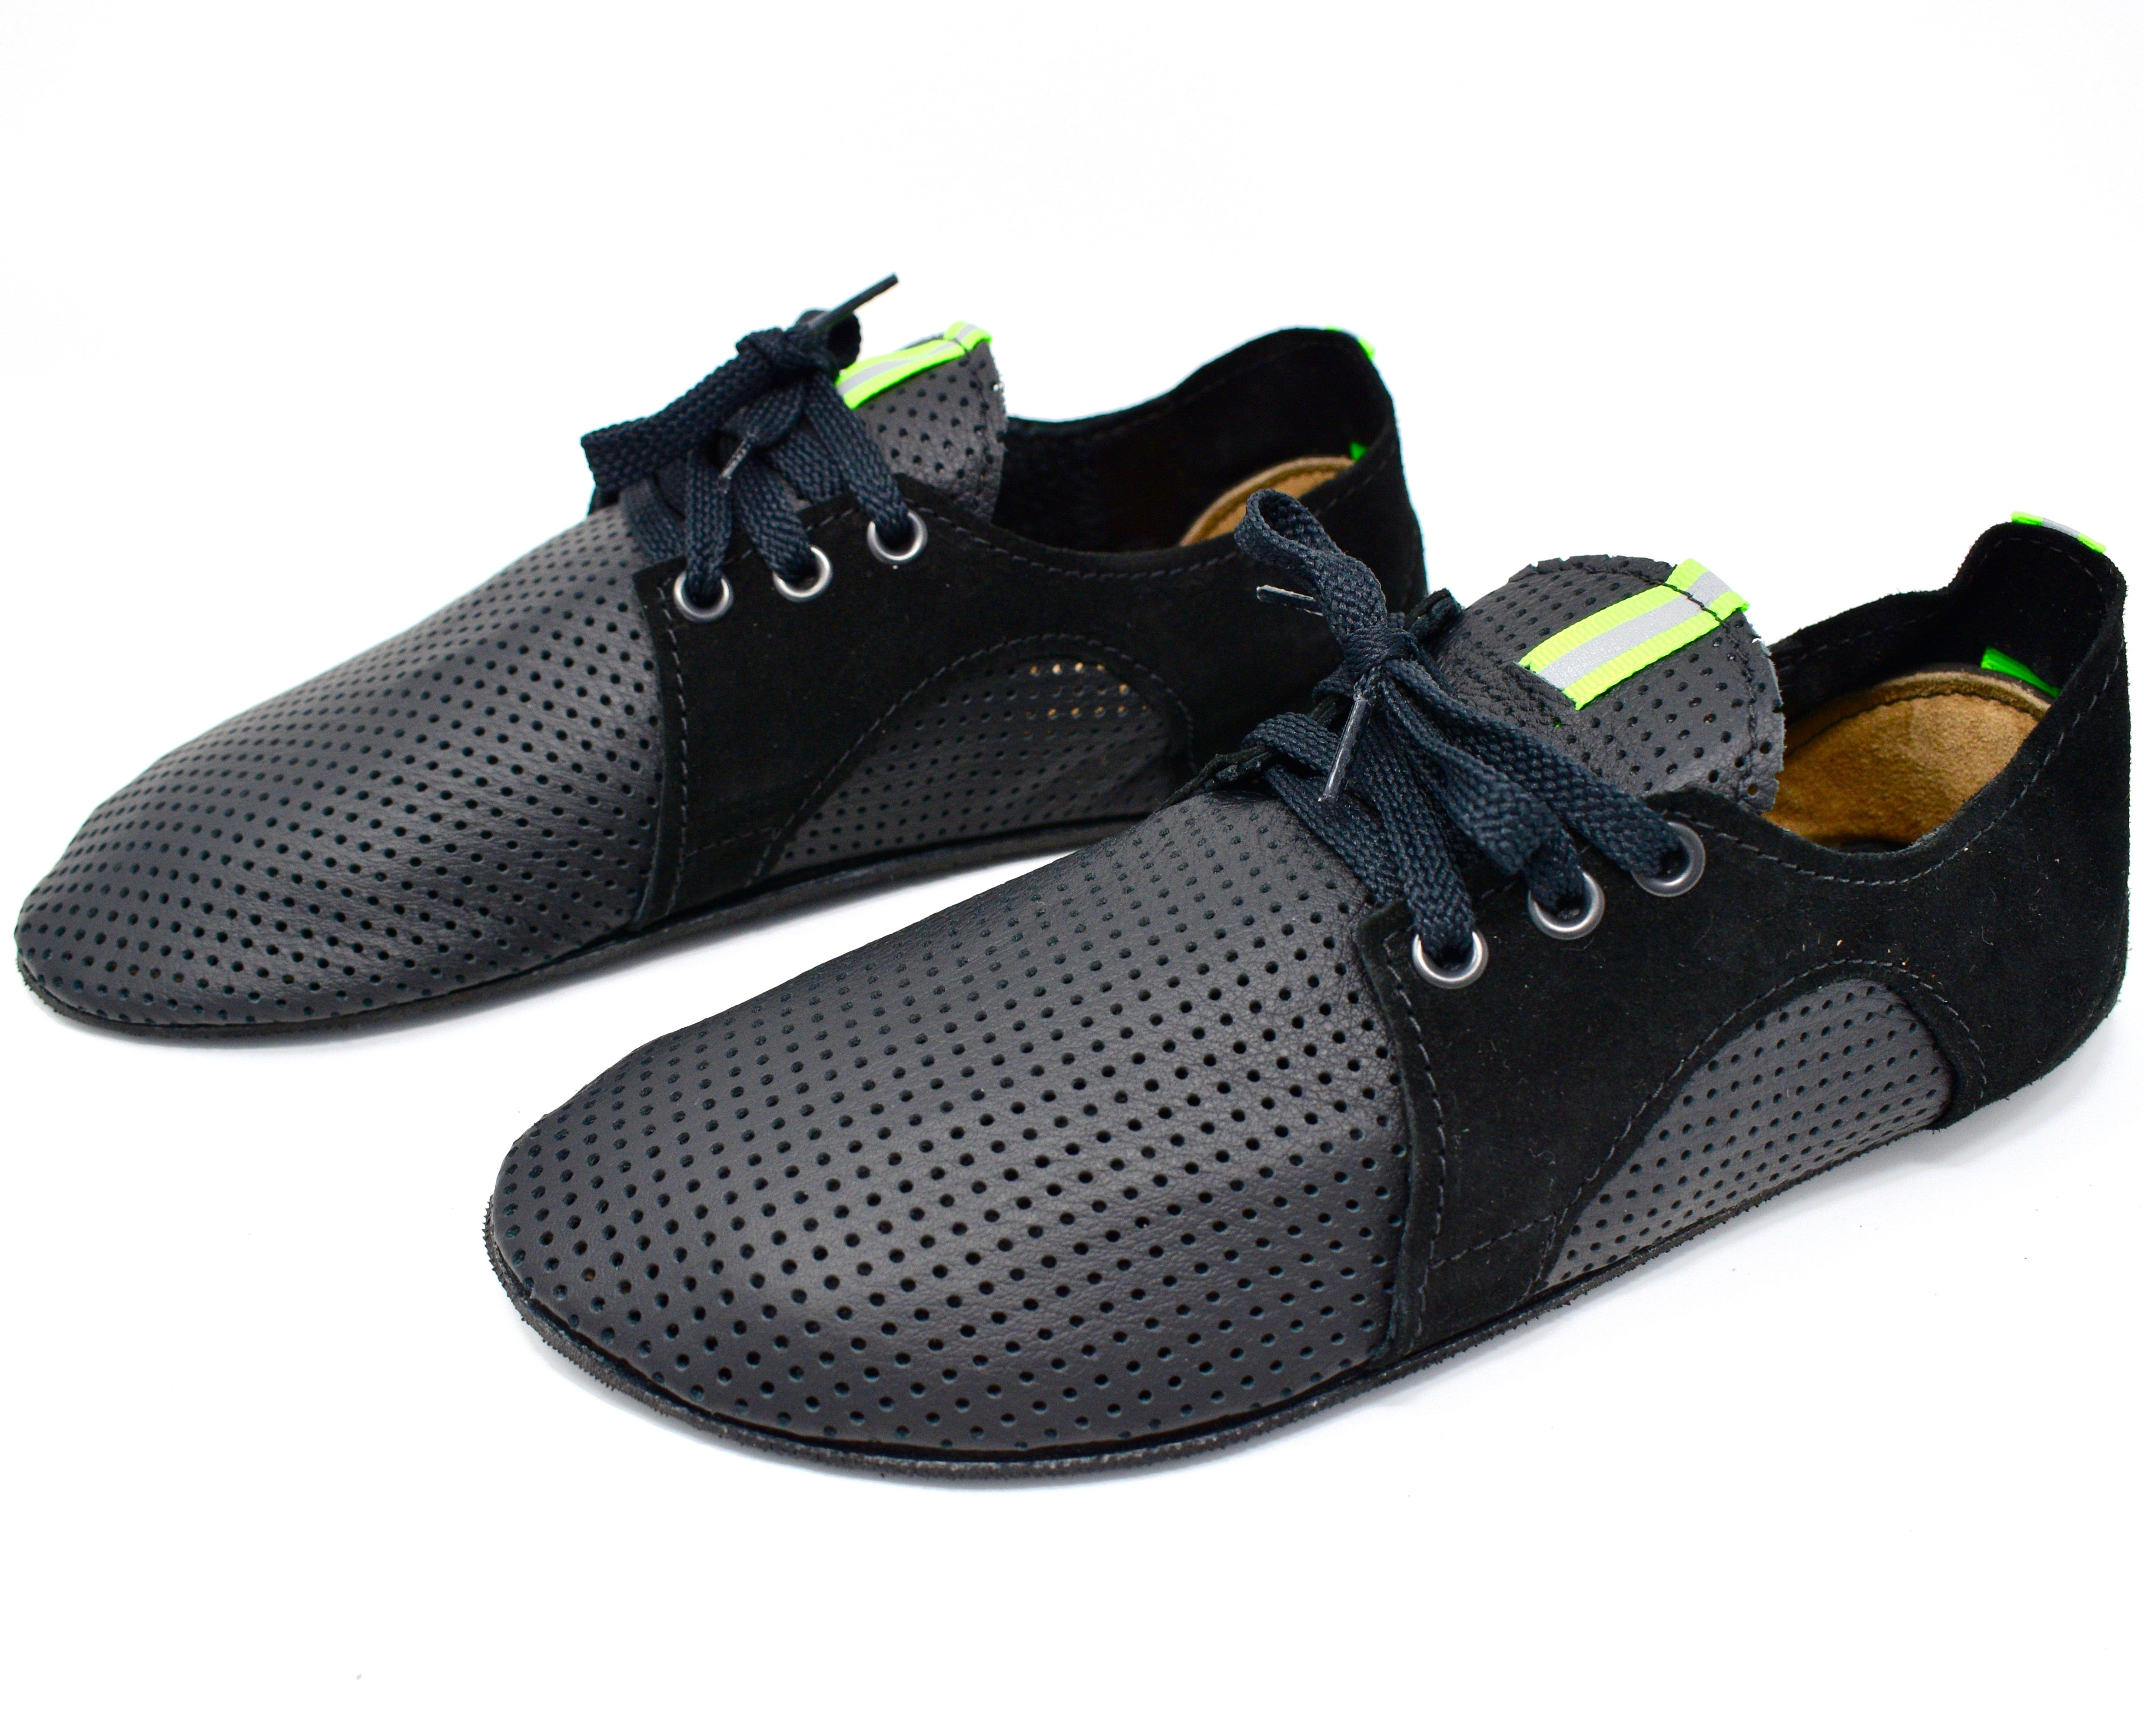 Men's Minimalist Barefoot Shoes